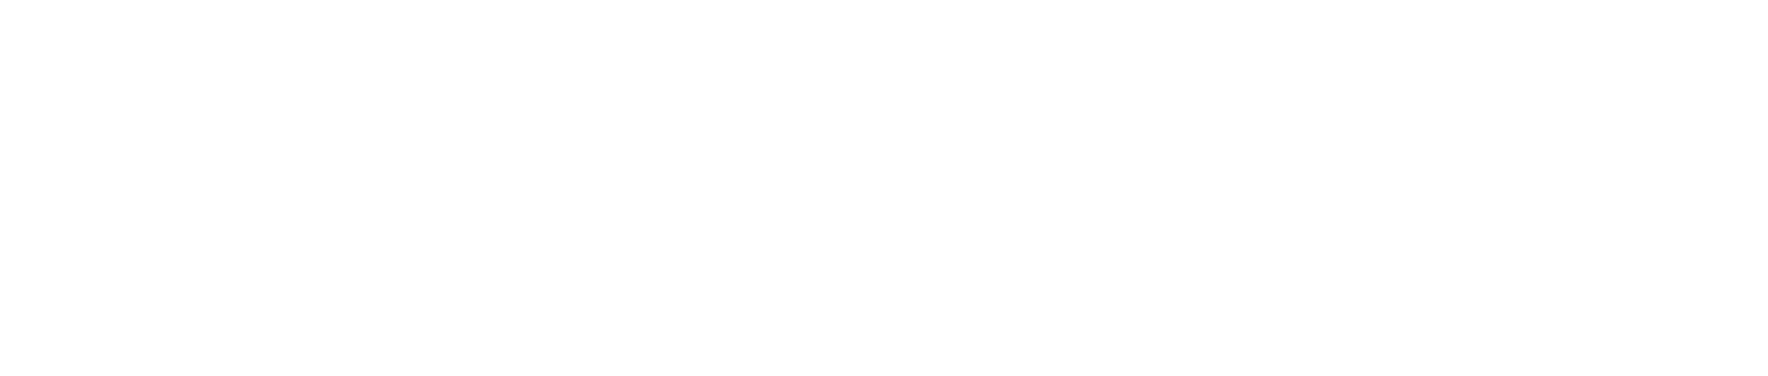 Texas Storm Squad logo